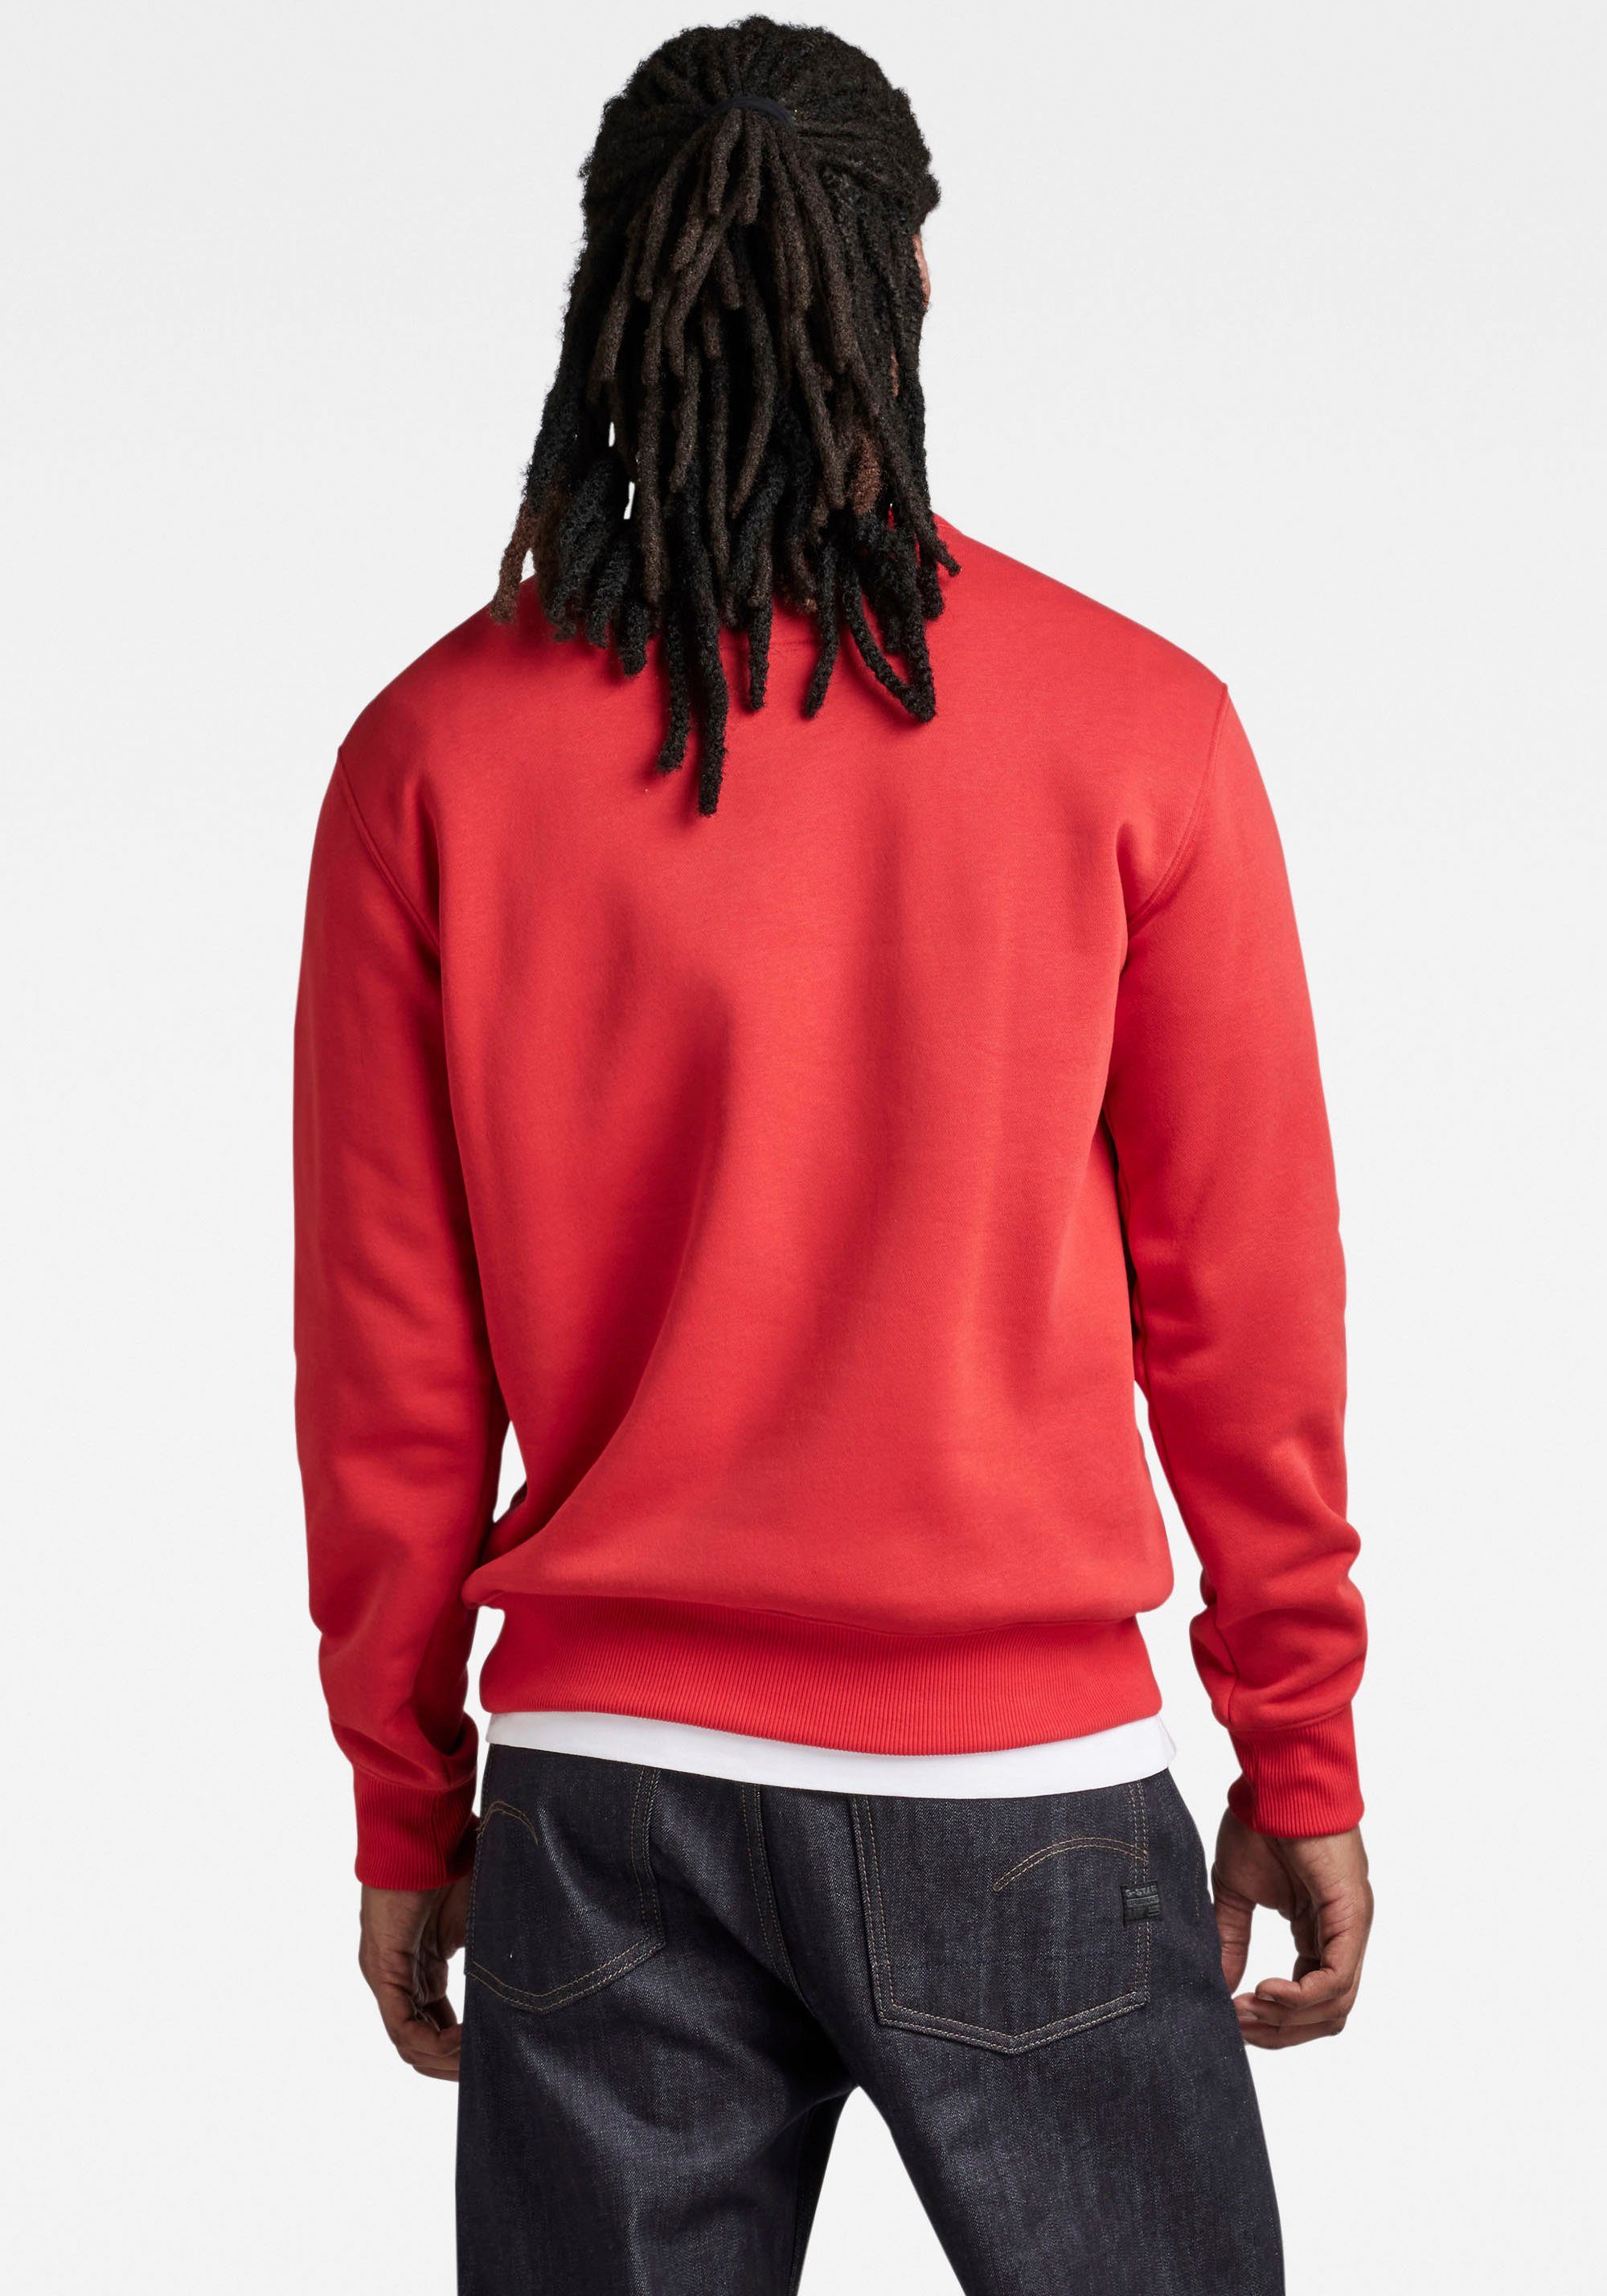 Red Sweatshirt Originals RAW Sweatshirt G-Star Acid